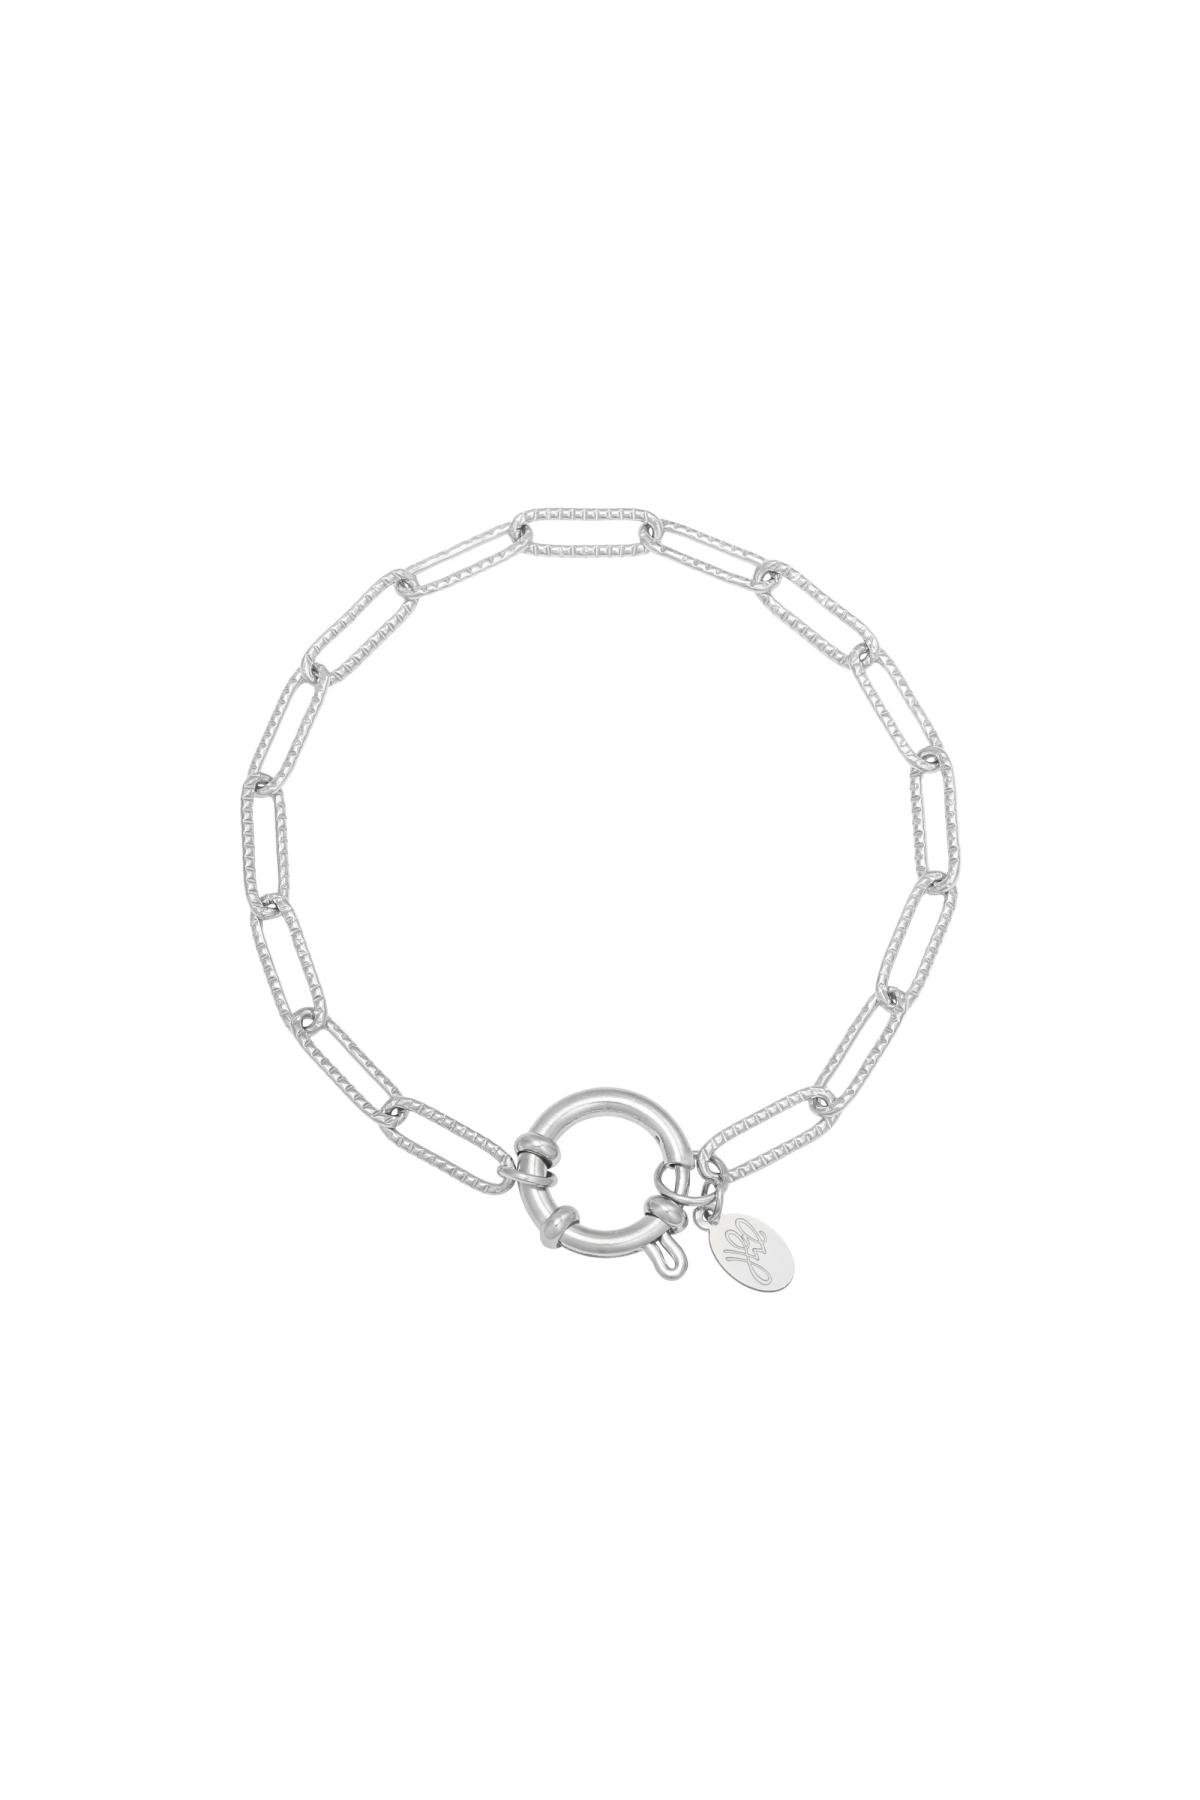 Bracelet Chain Beau Silver Stainless Steel